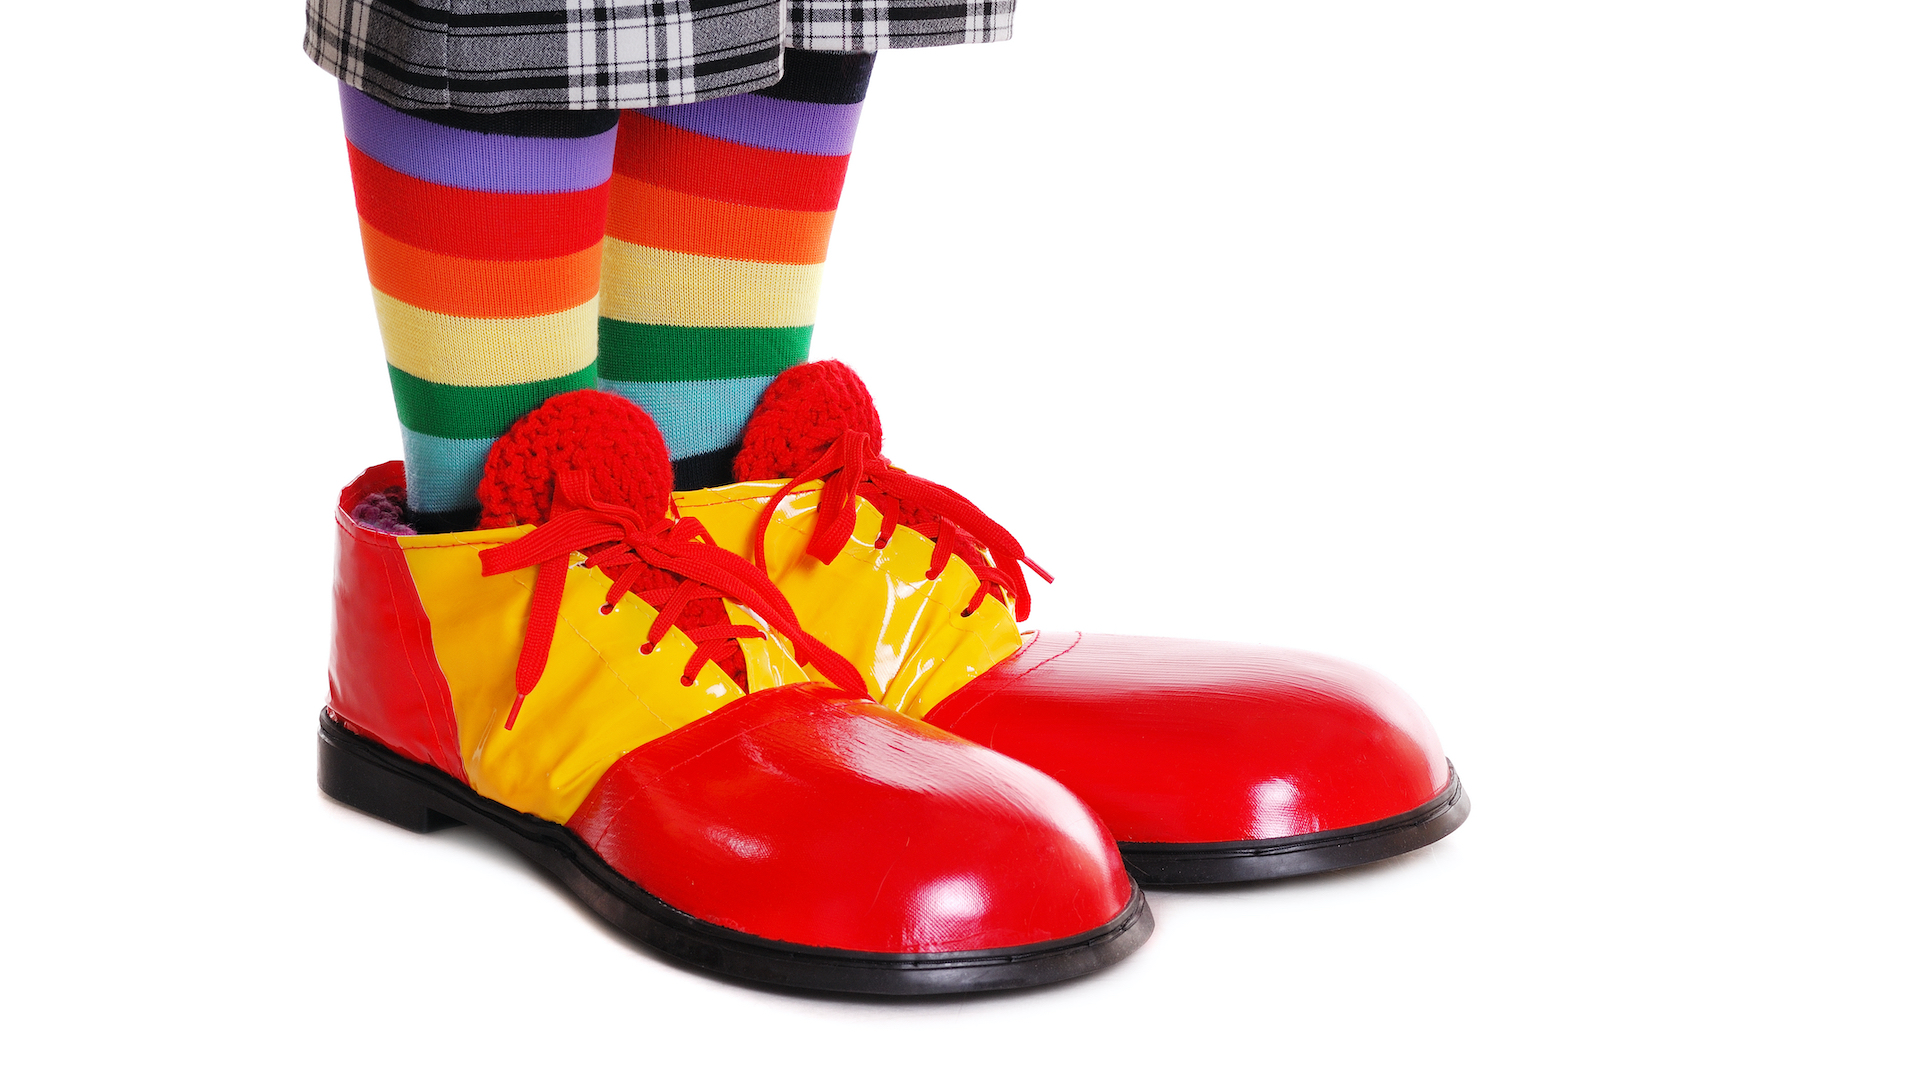 A pair of clown shoes